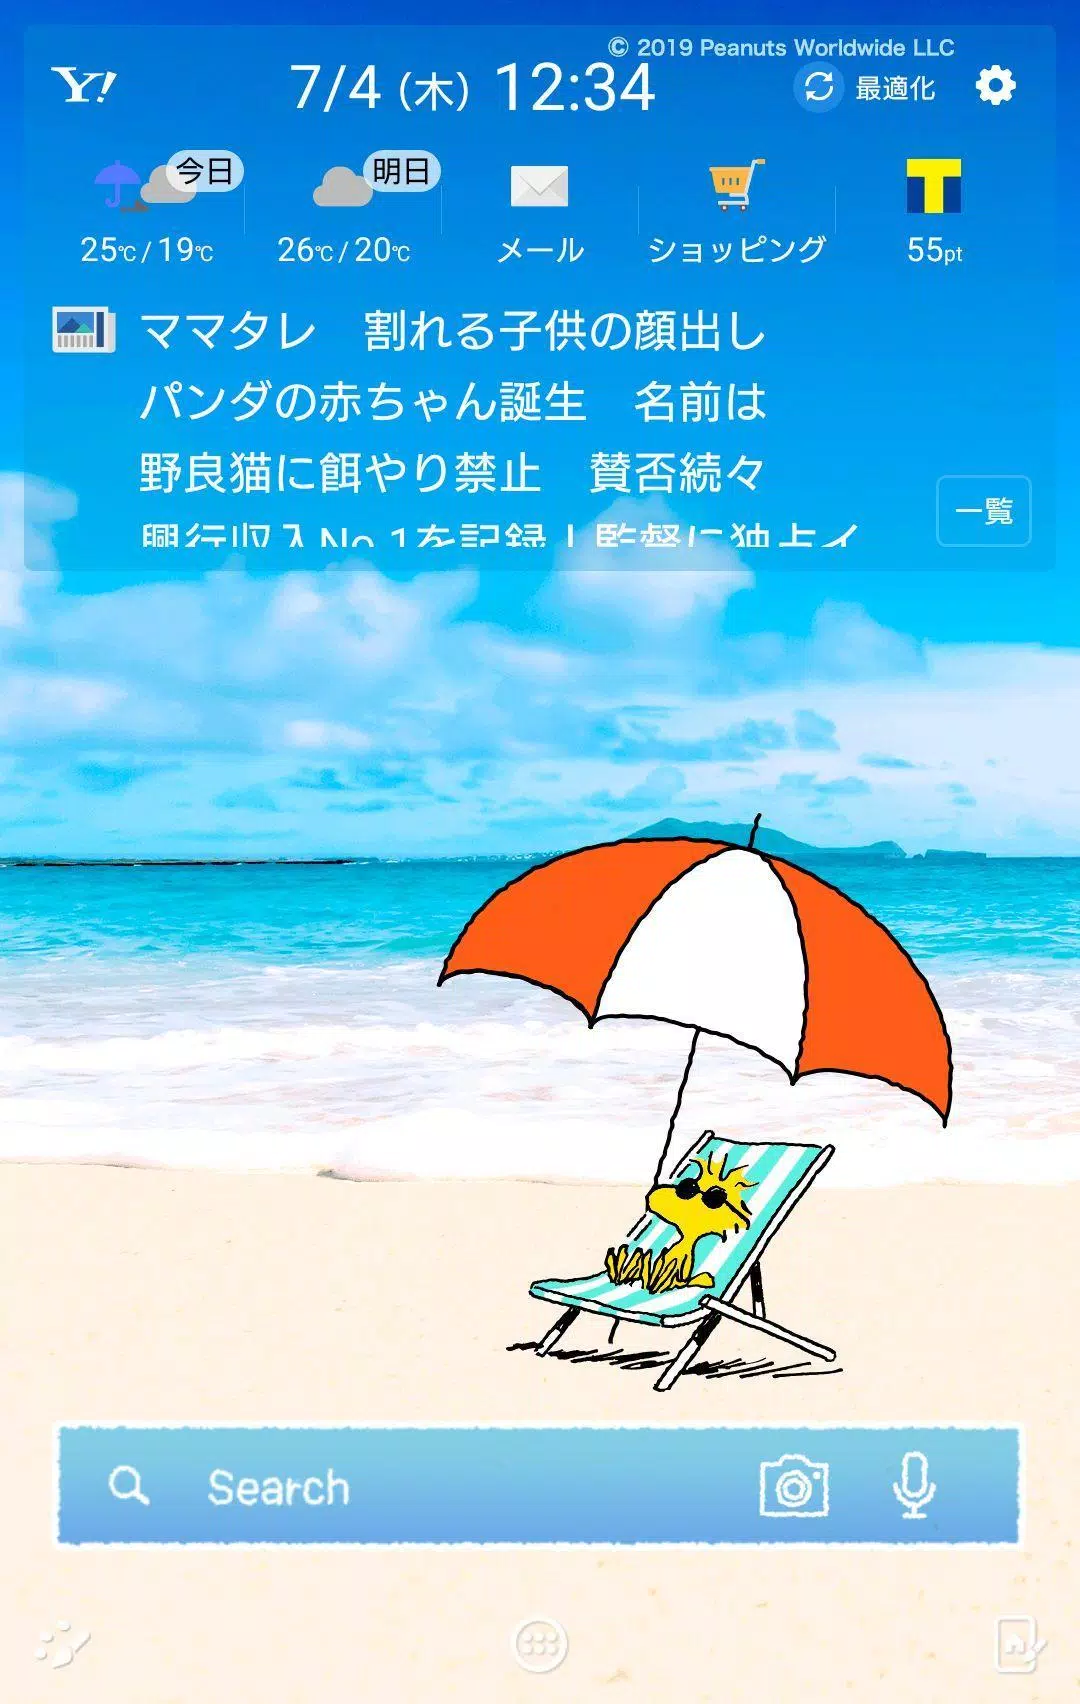 Download Do Apk De スヌーピー 壁紙きせかえ 夏の海 Para Android